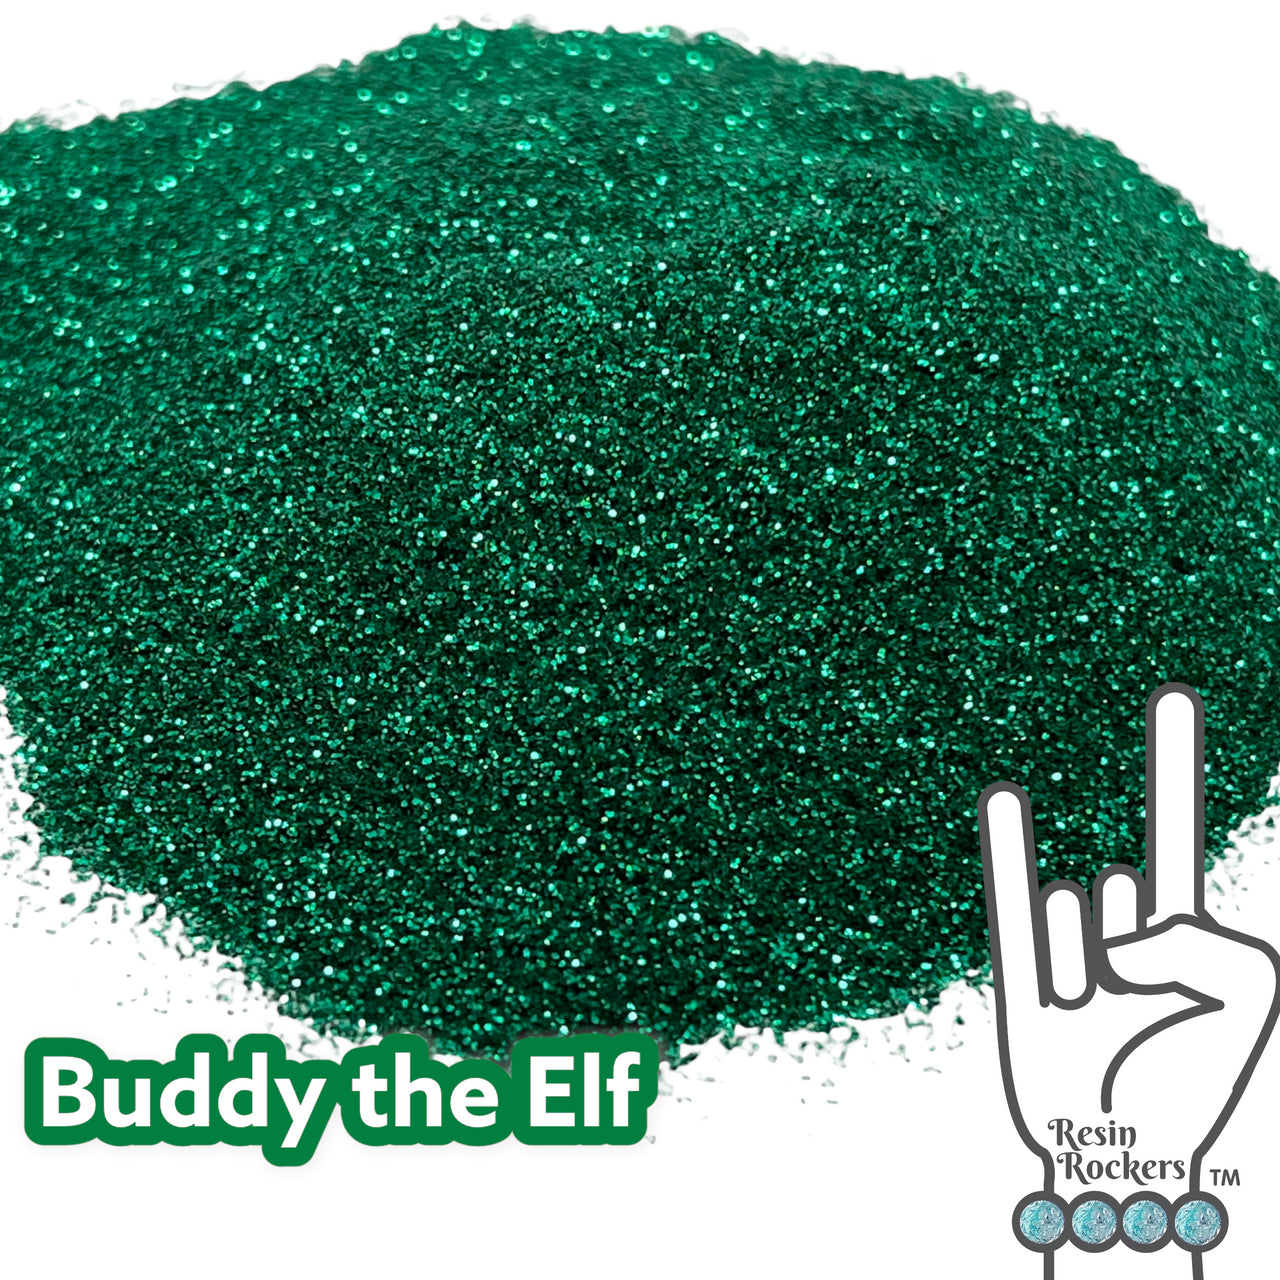 Buddy the Elf Green Pixie for Poxy Micro Fine Glitter